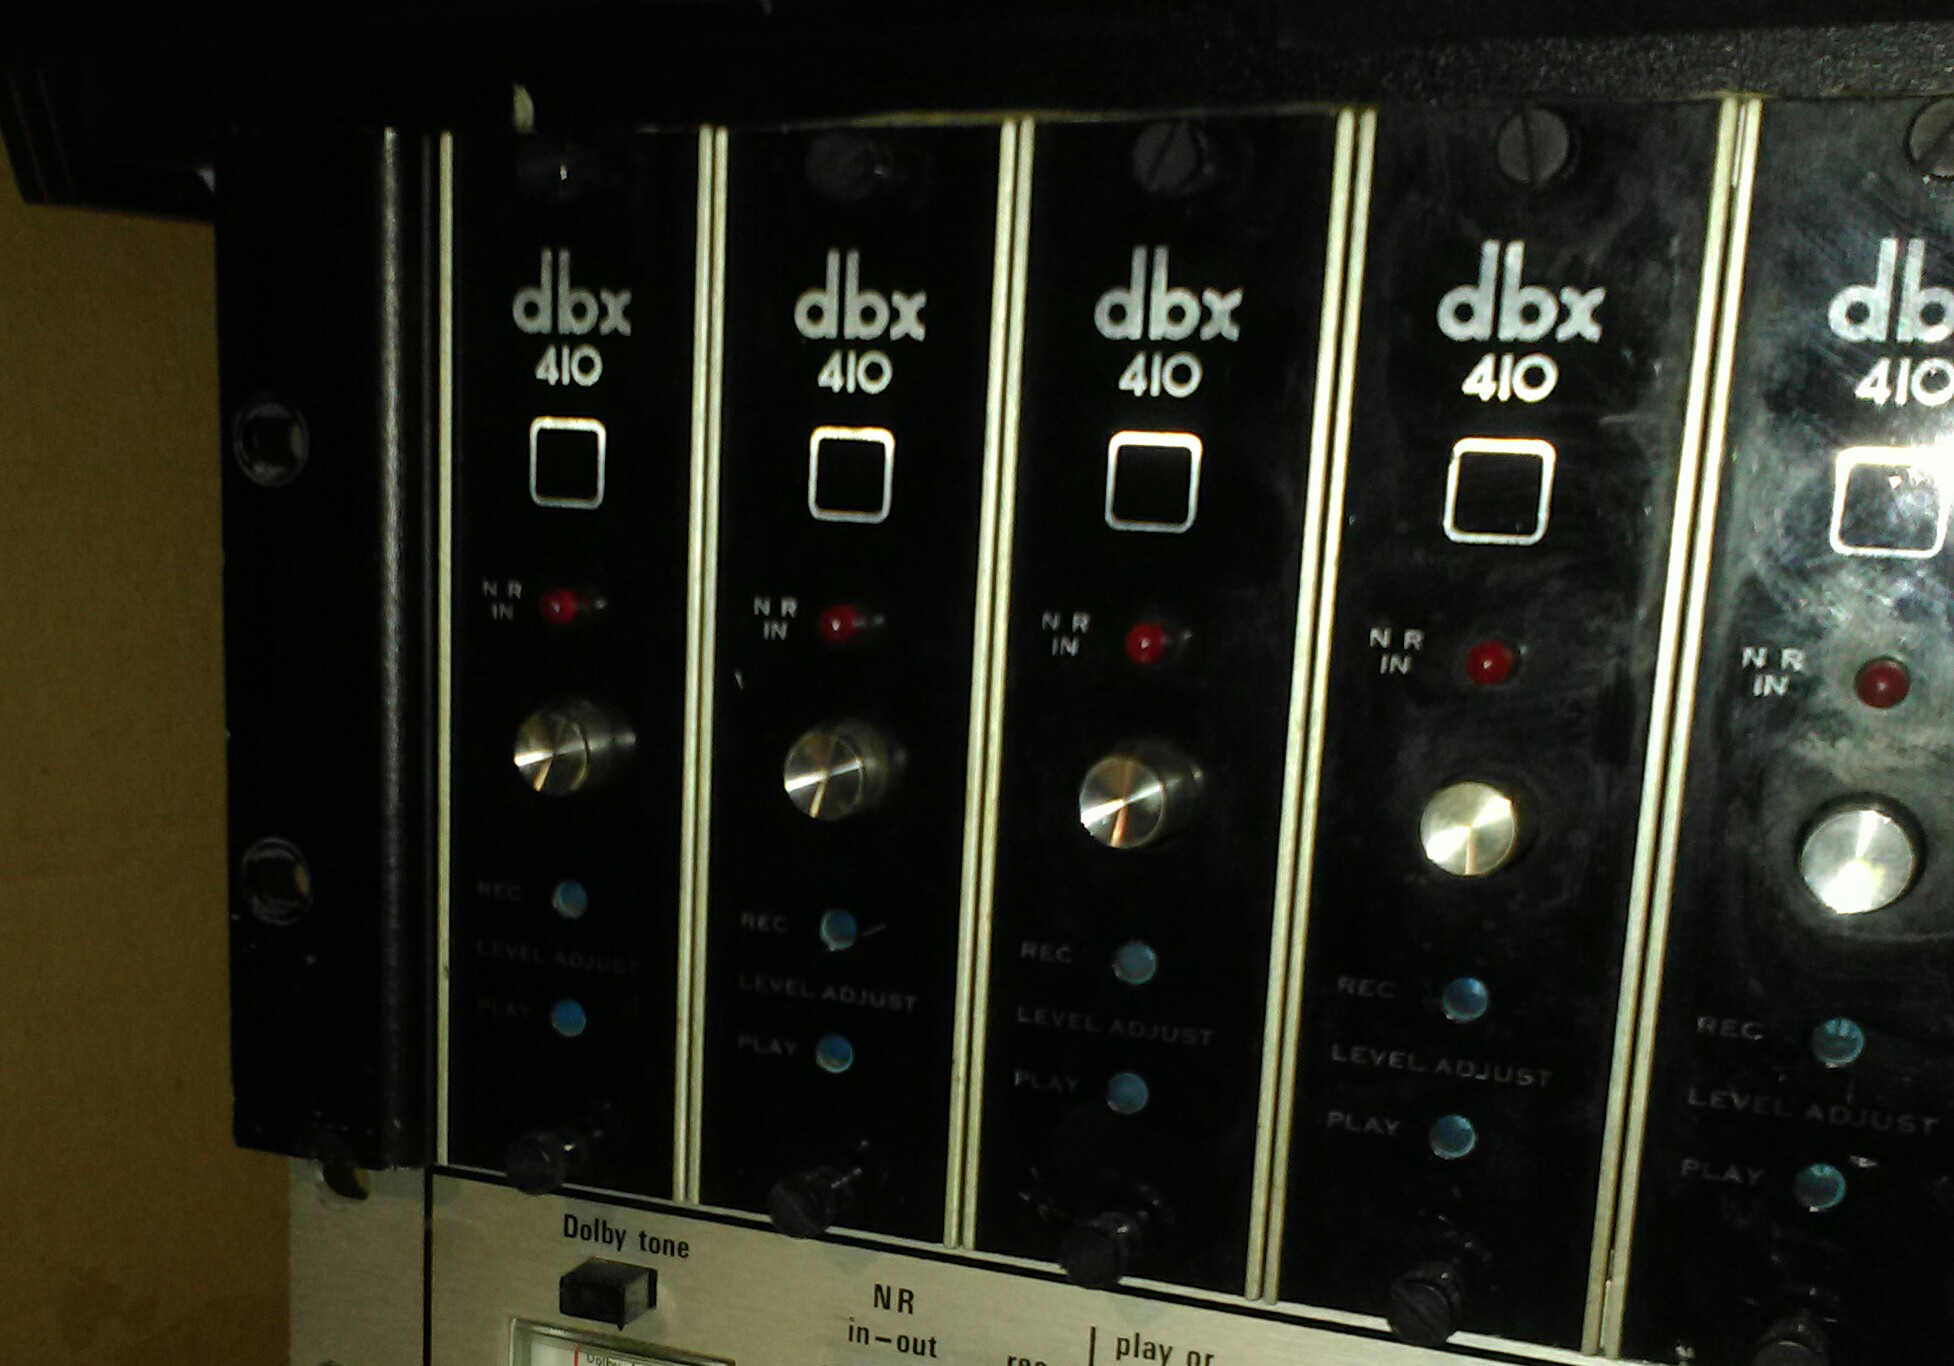 234XL - dbx 234XL - Audiofanzine